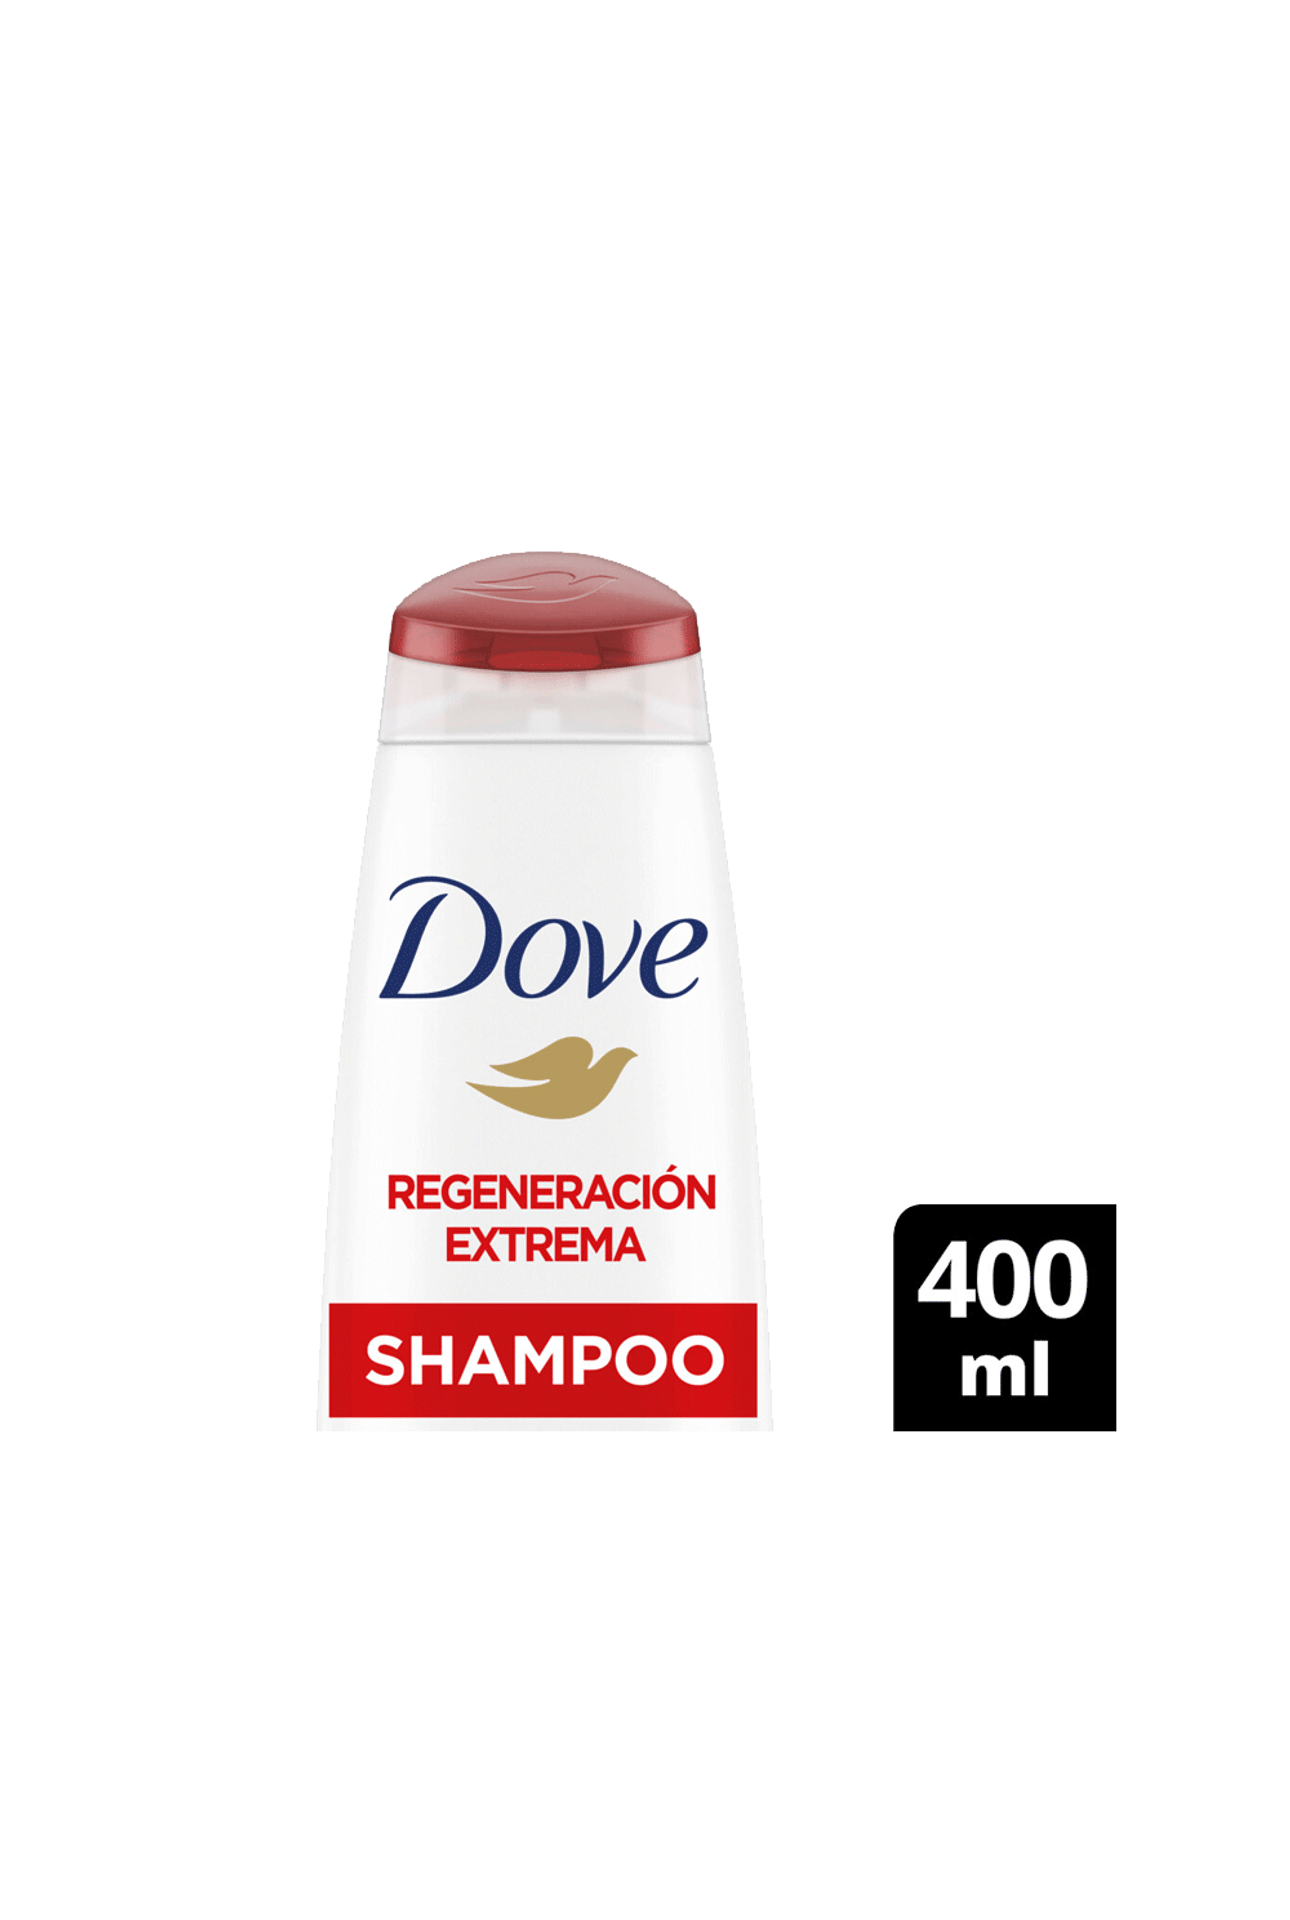 Dove-Shampoo-Dove-Regeneracion-Extrema-x-400ml-7791293047171_img1